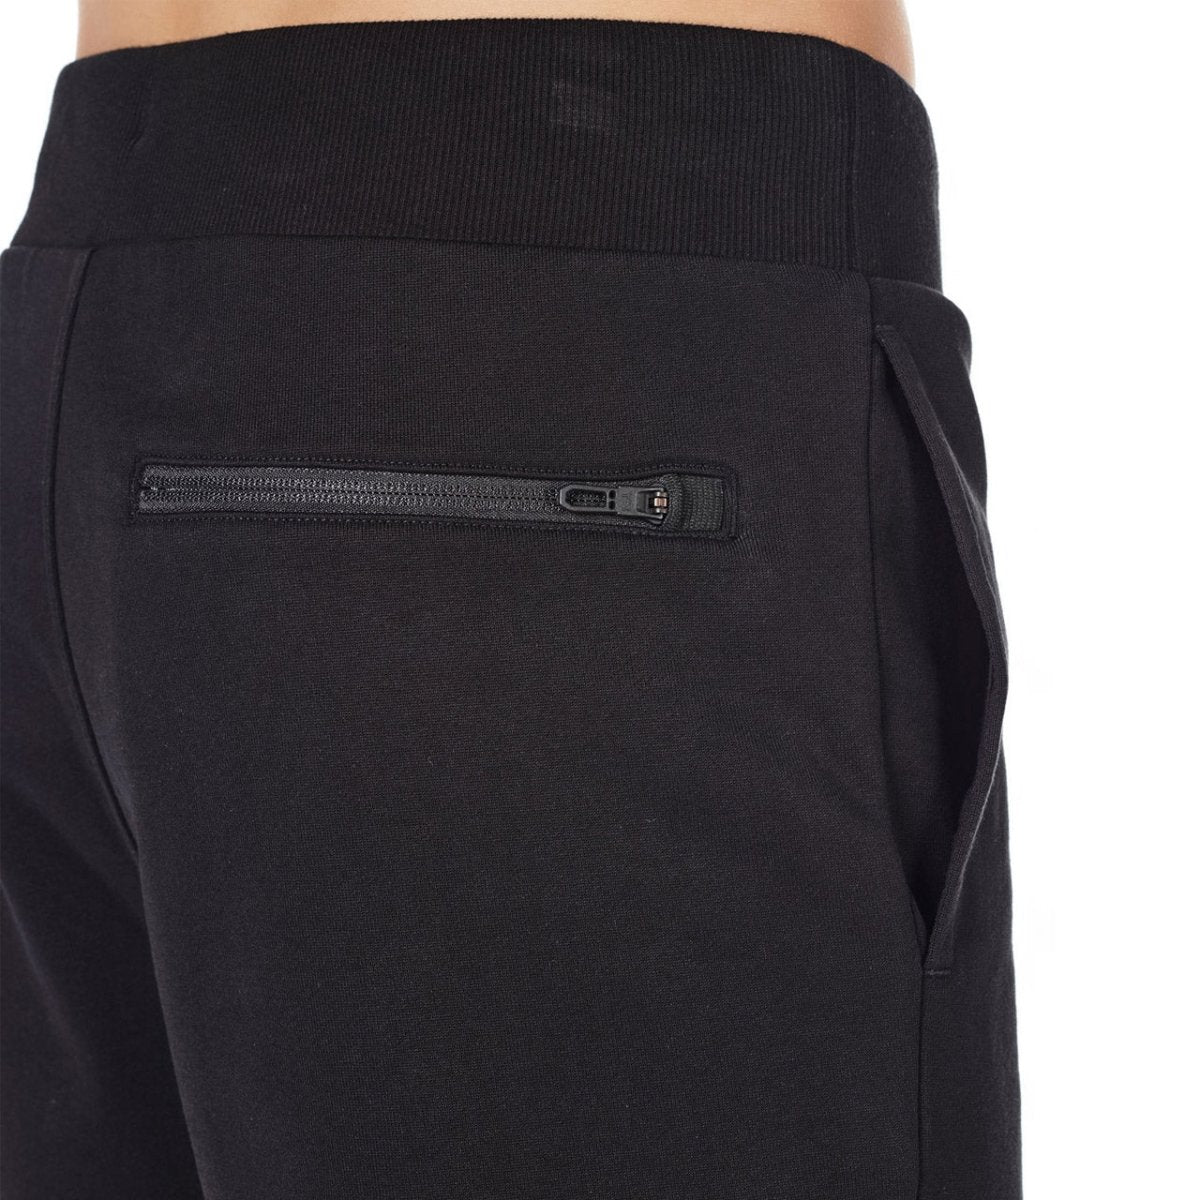 Y-3 M Classic Shorts (Schwarz)  - Allike Store